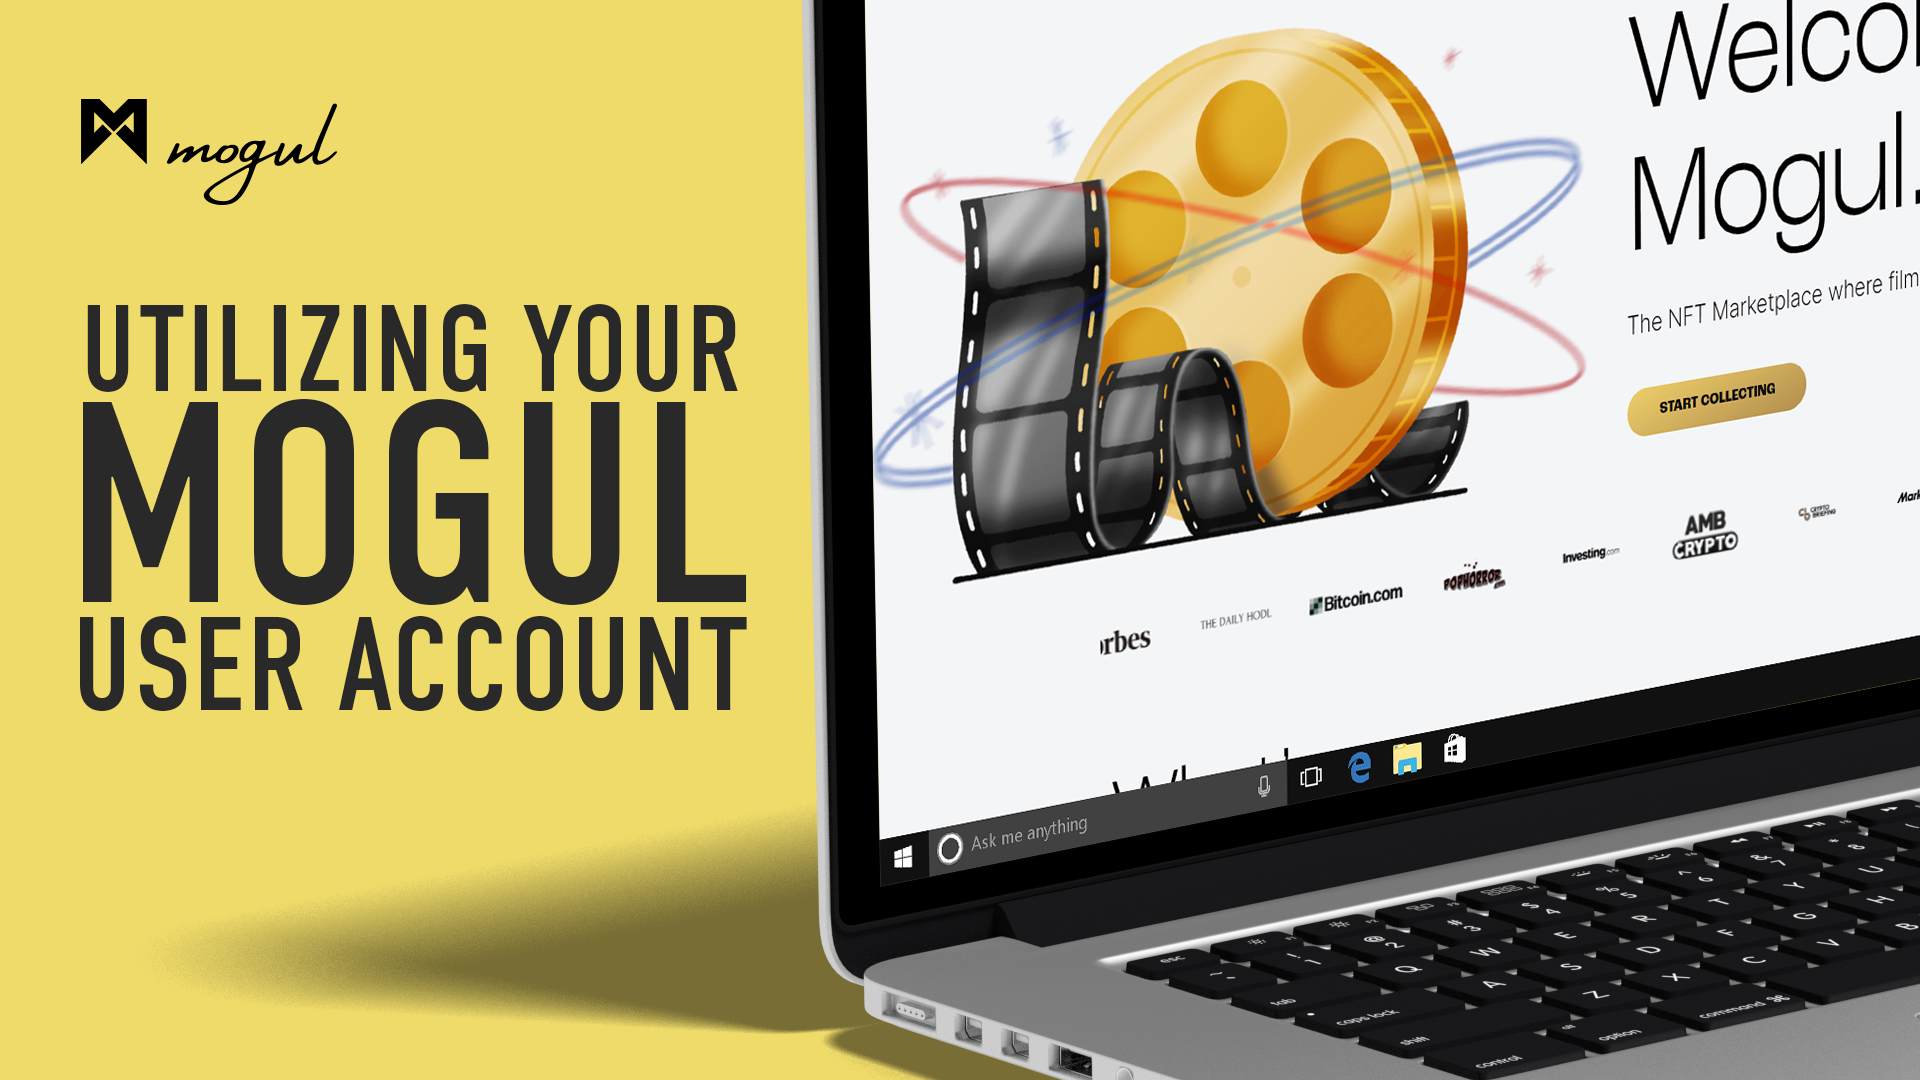 Mogul Productions - Utilizing Your Mogul User Account